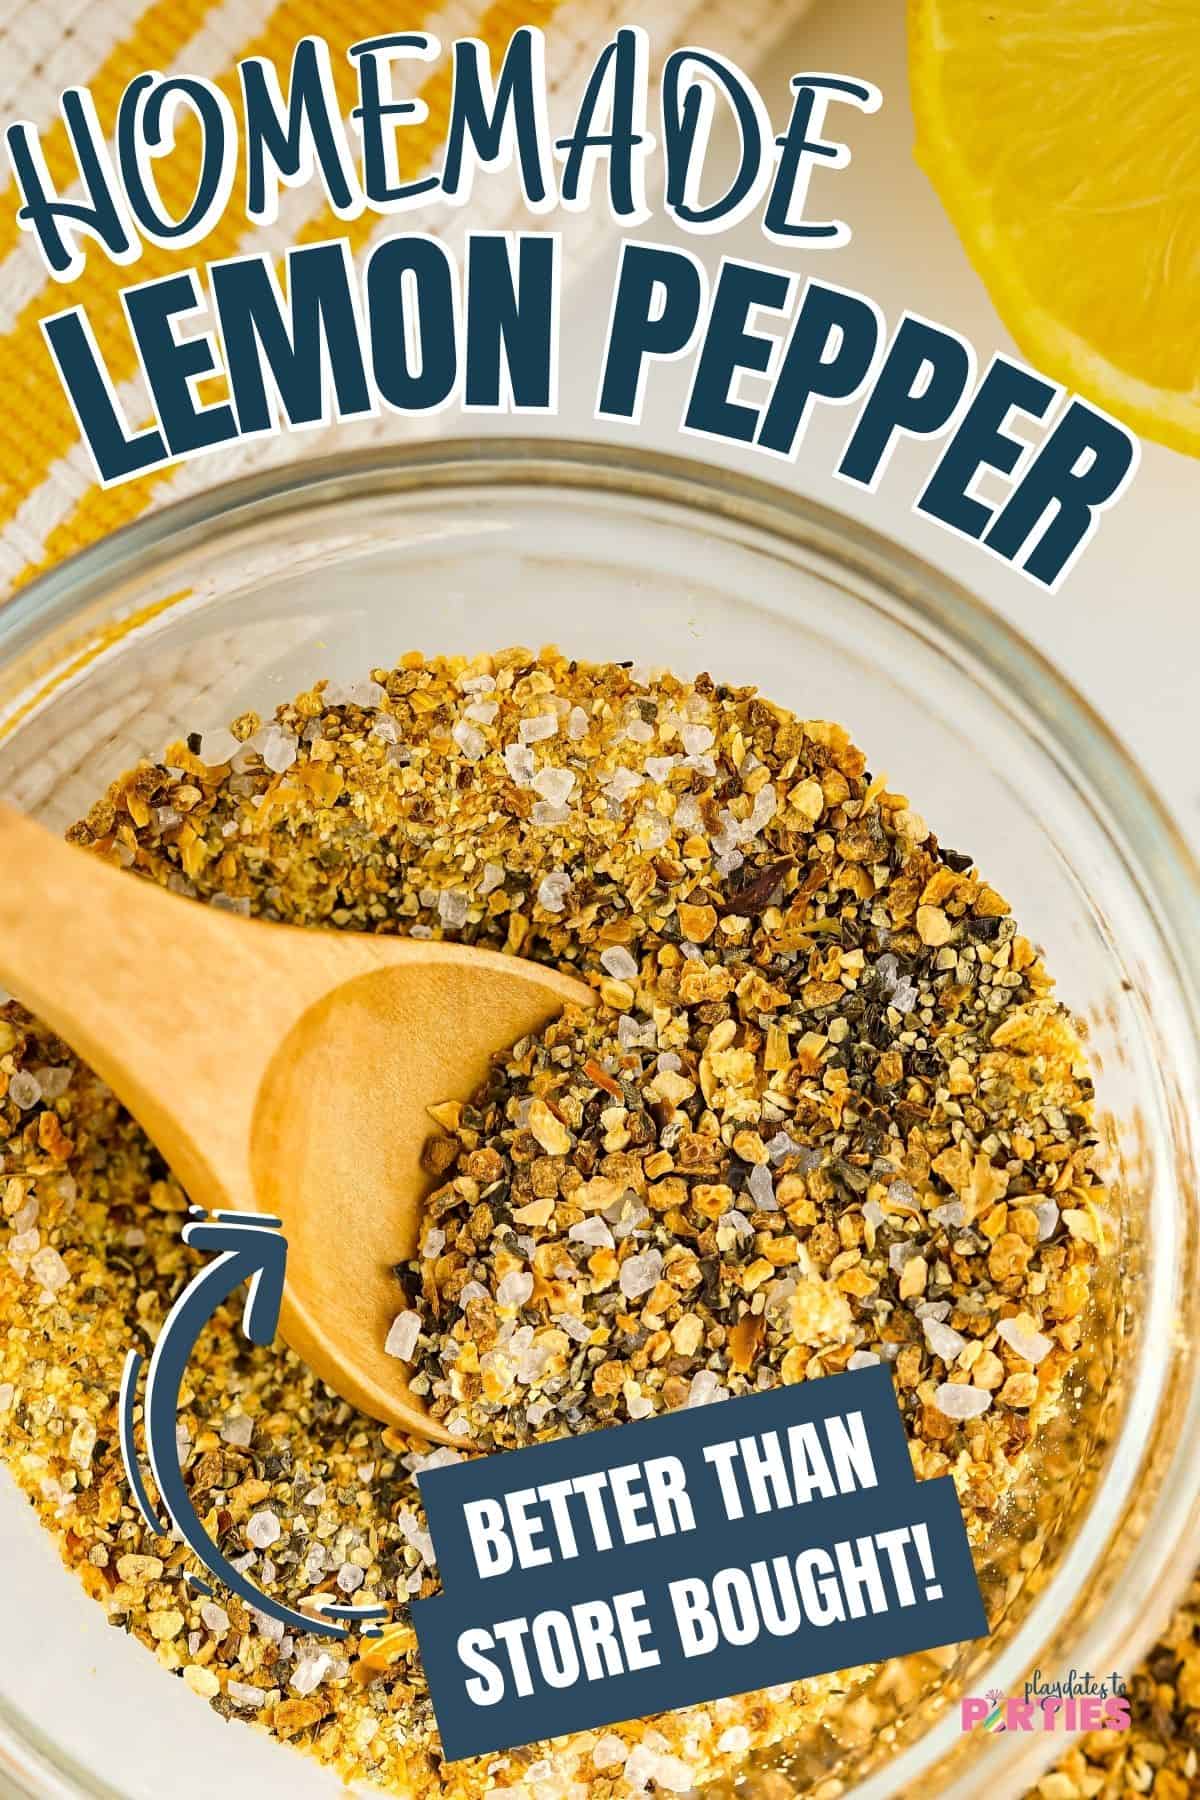 Homemade Lemon Pepper seasoning pin image.